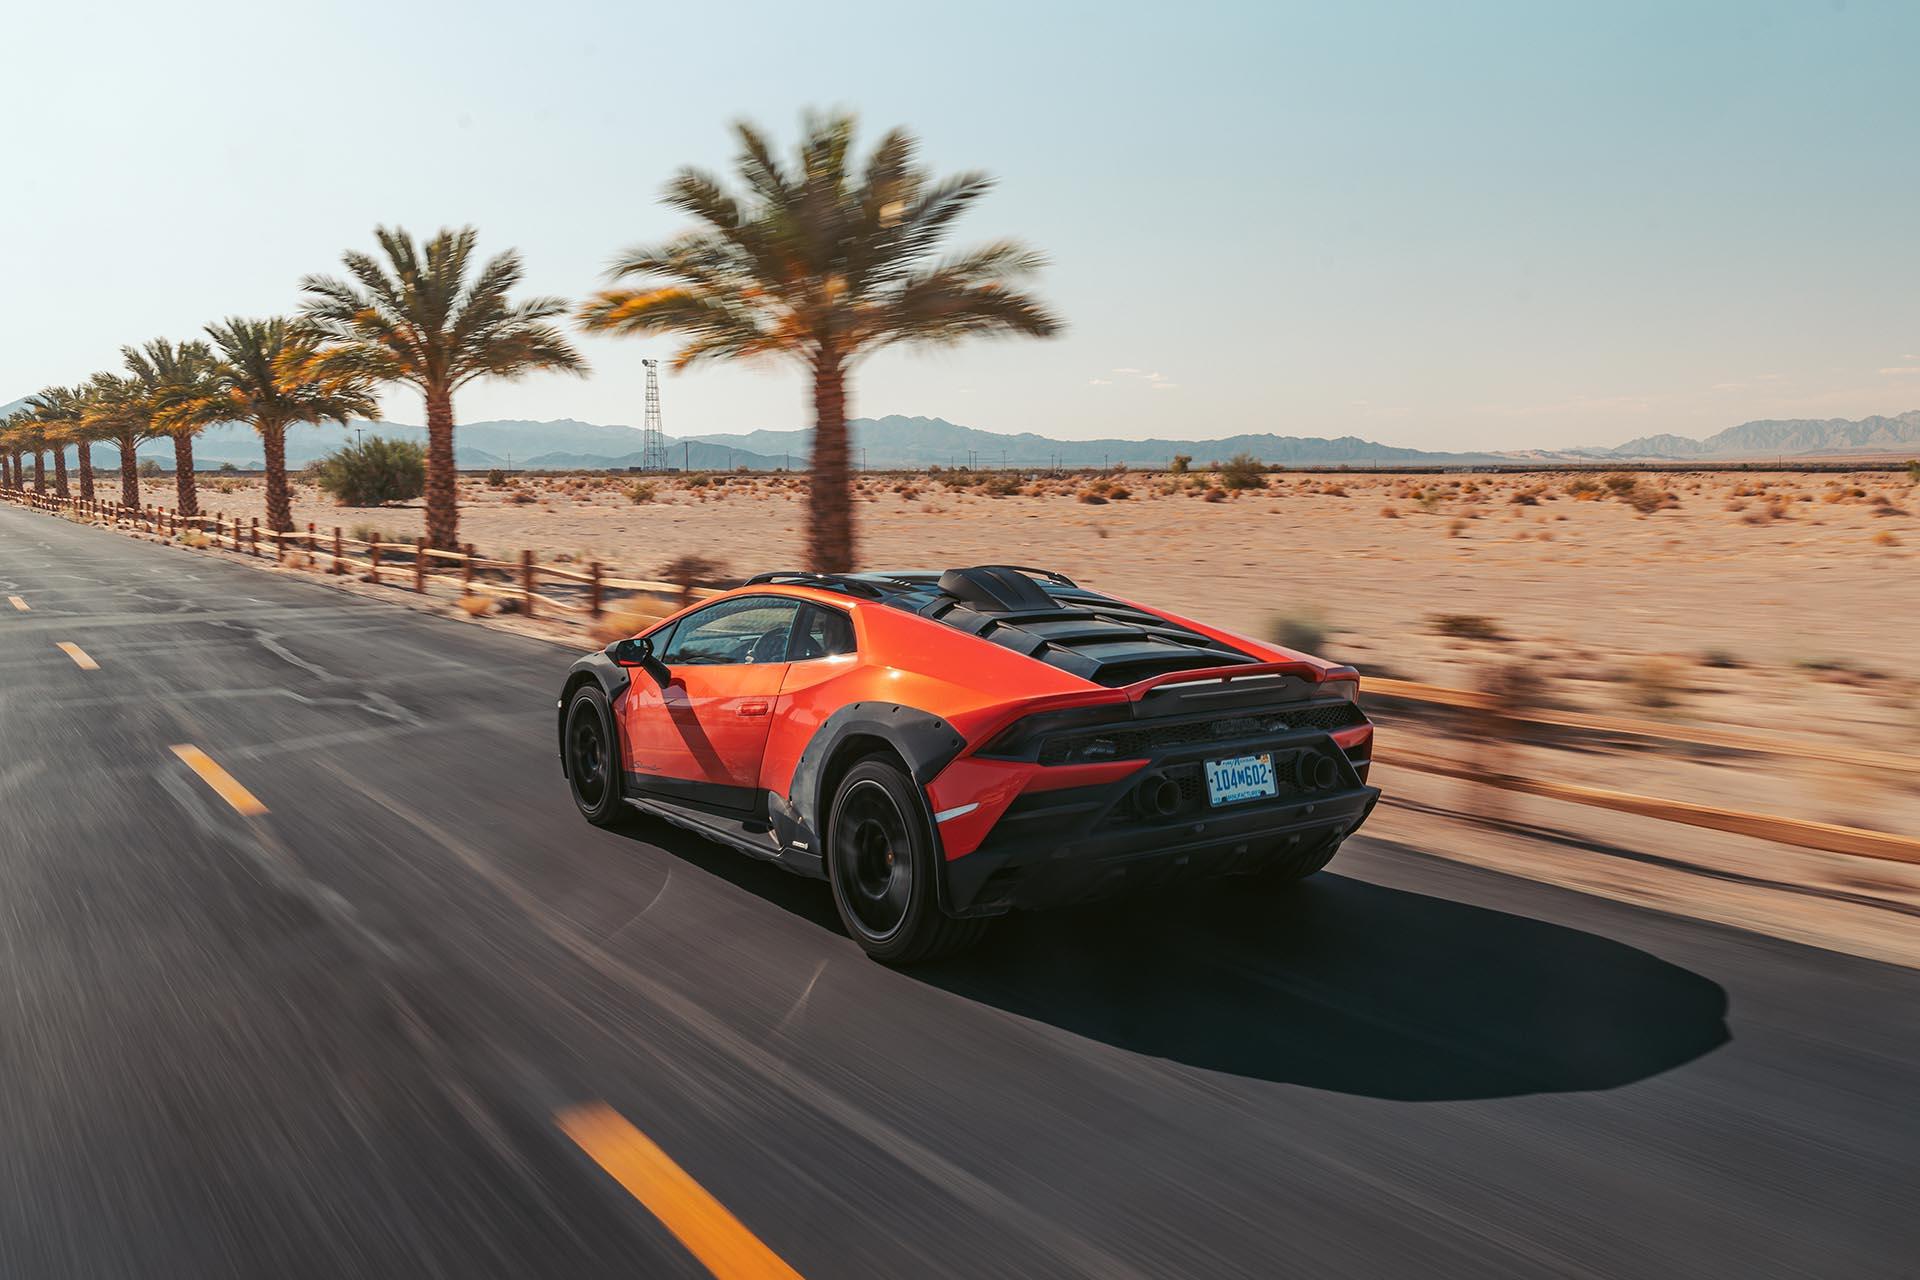 Lamborghini Huracán Sterrato op de weg naast de woestijn (roadtrip)